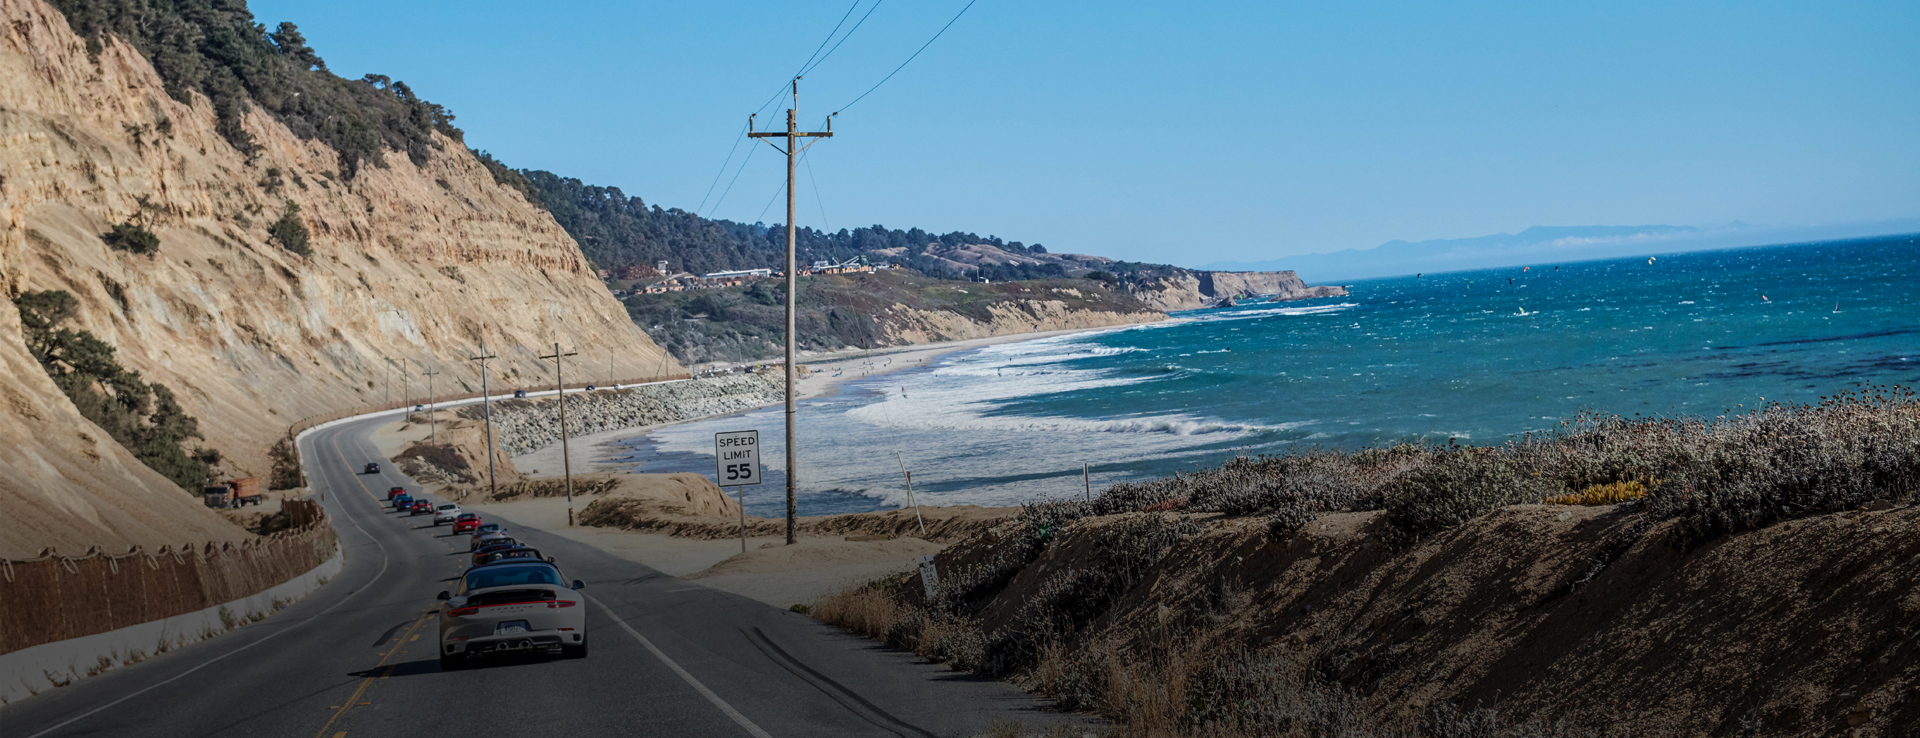 A coastal road between sandstone cliffs and surf-ready ocean